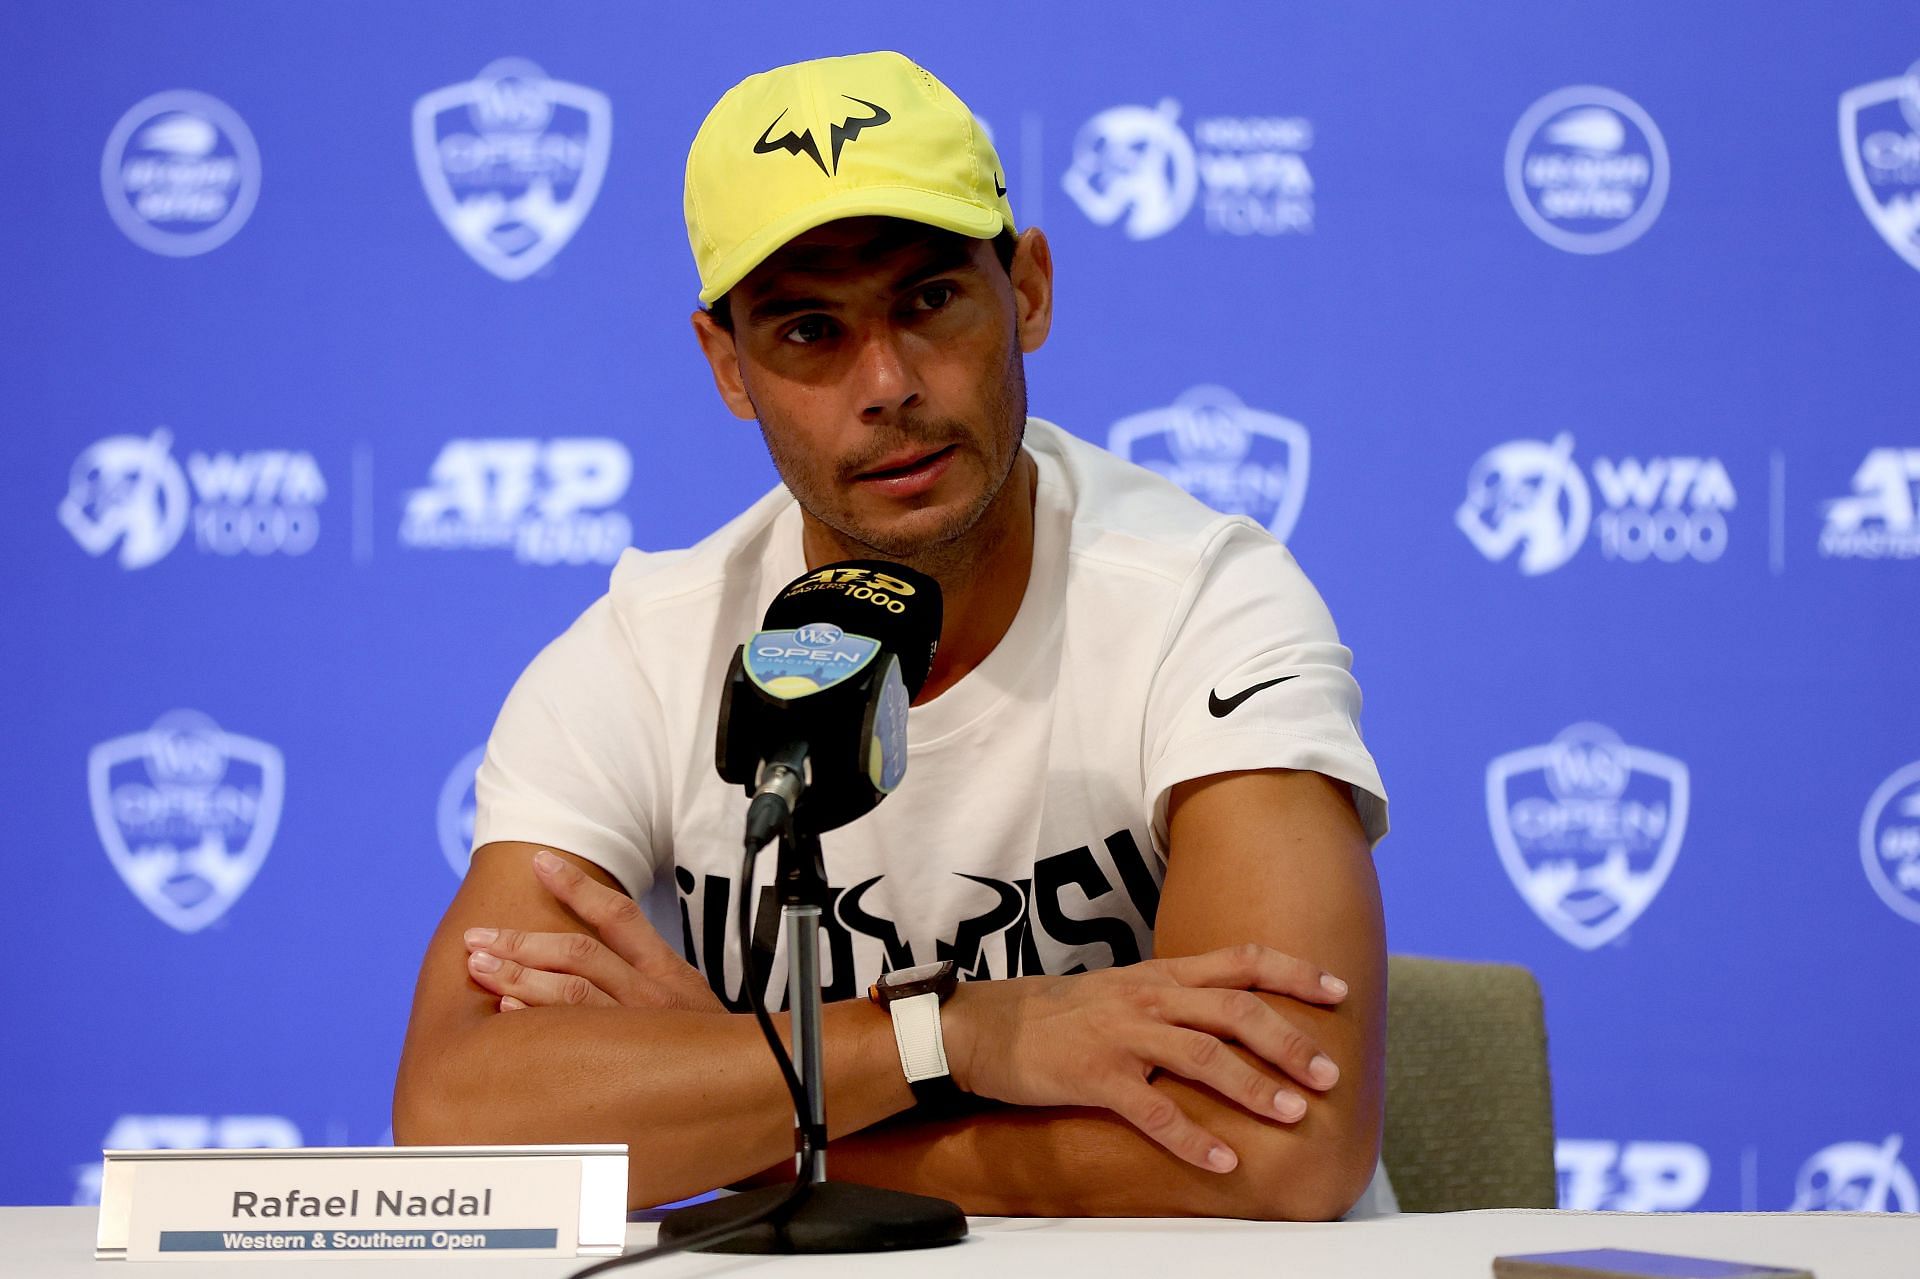 Nadal heaped praise on Serena Williams